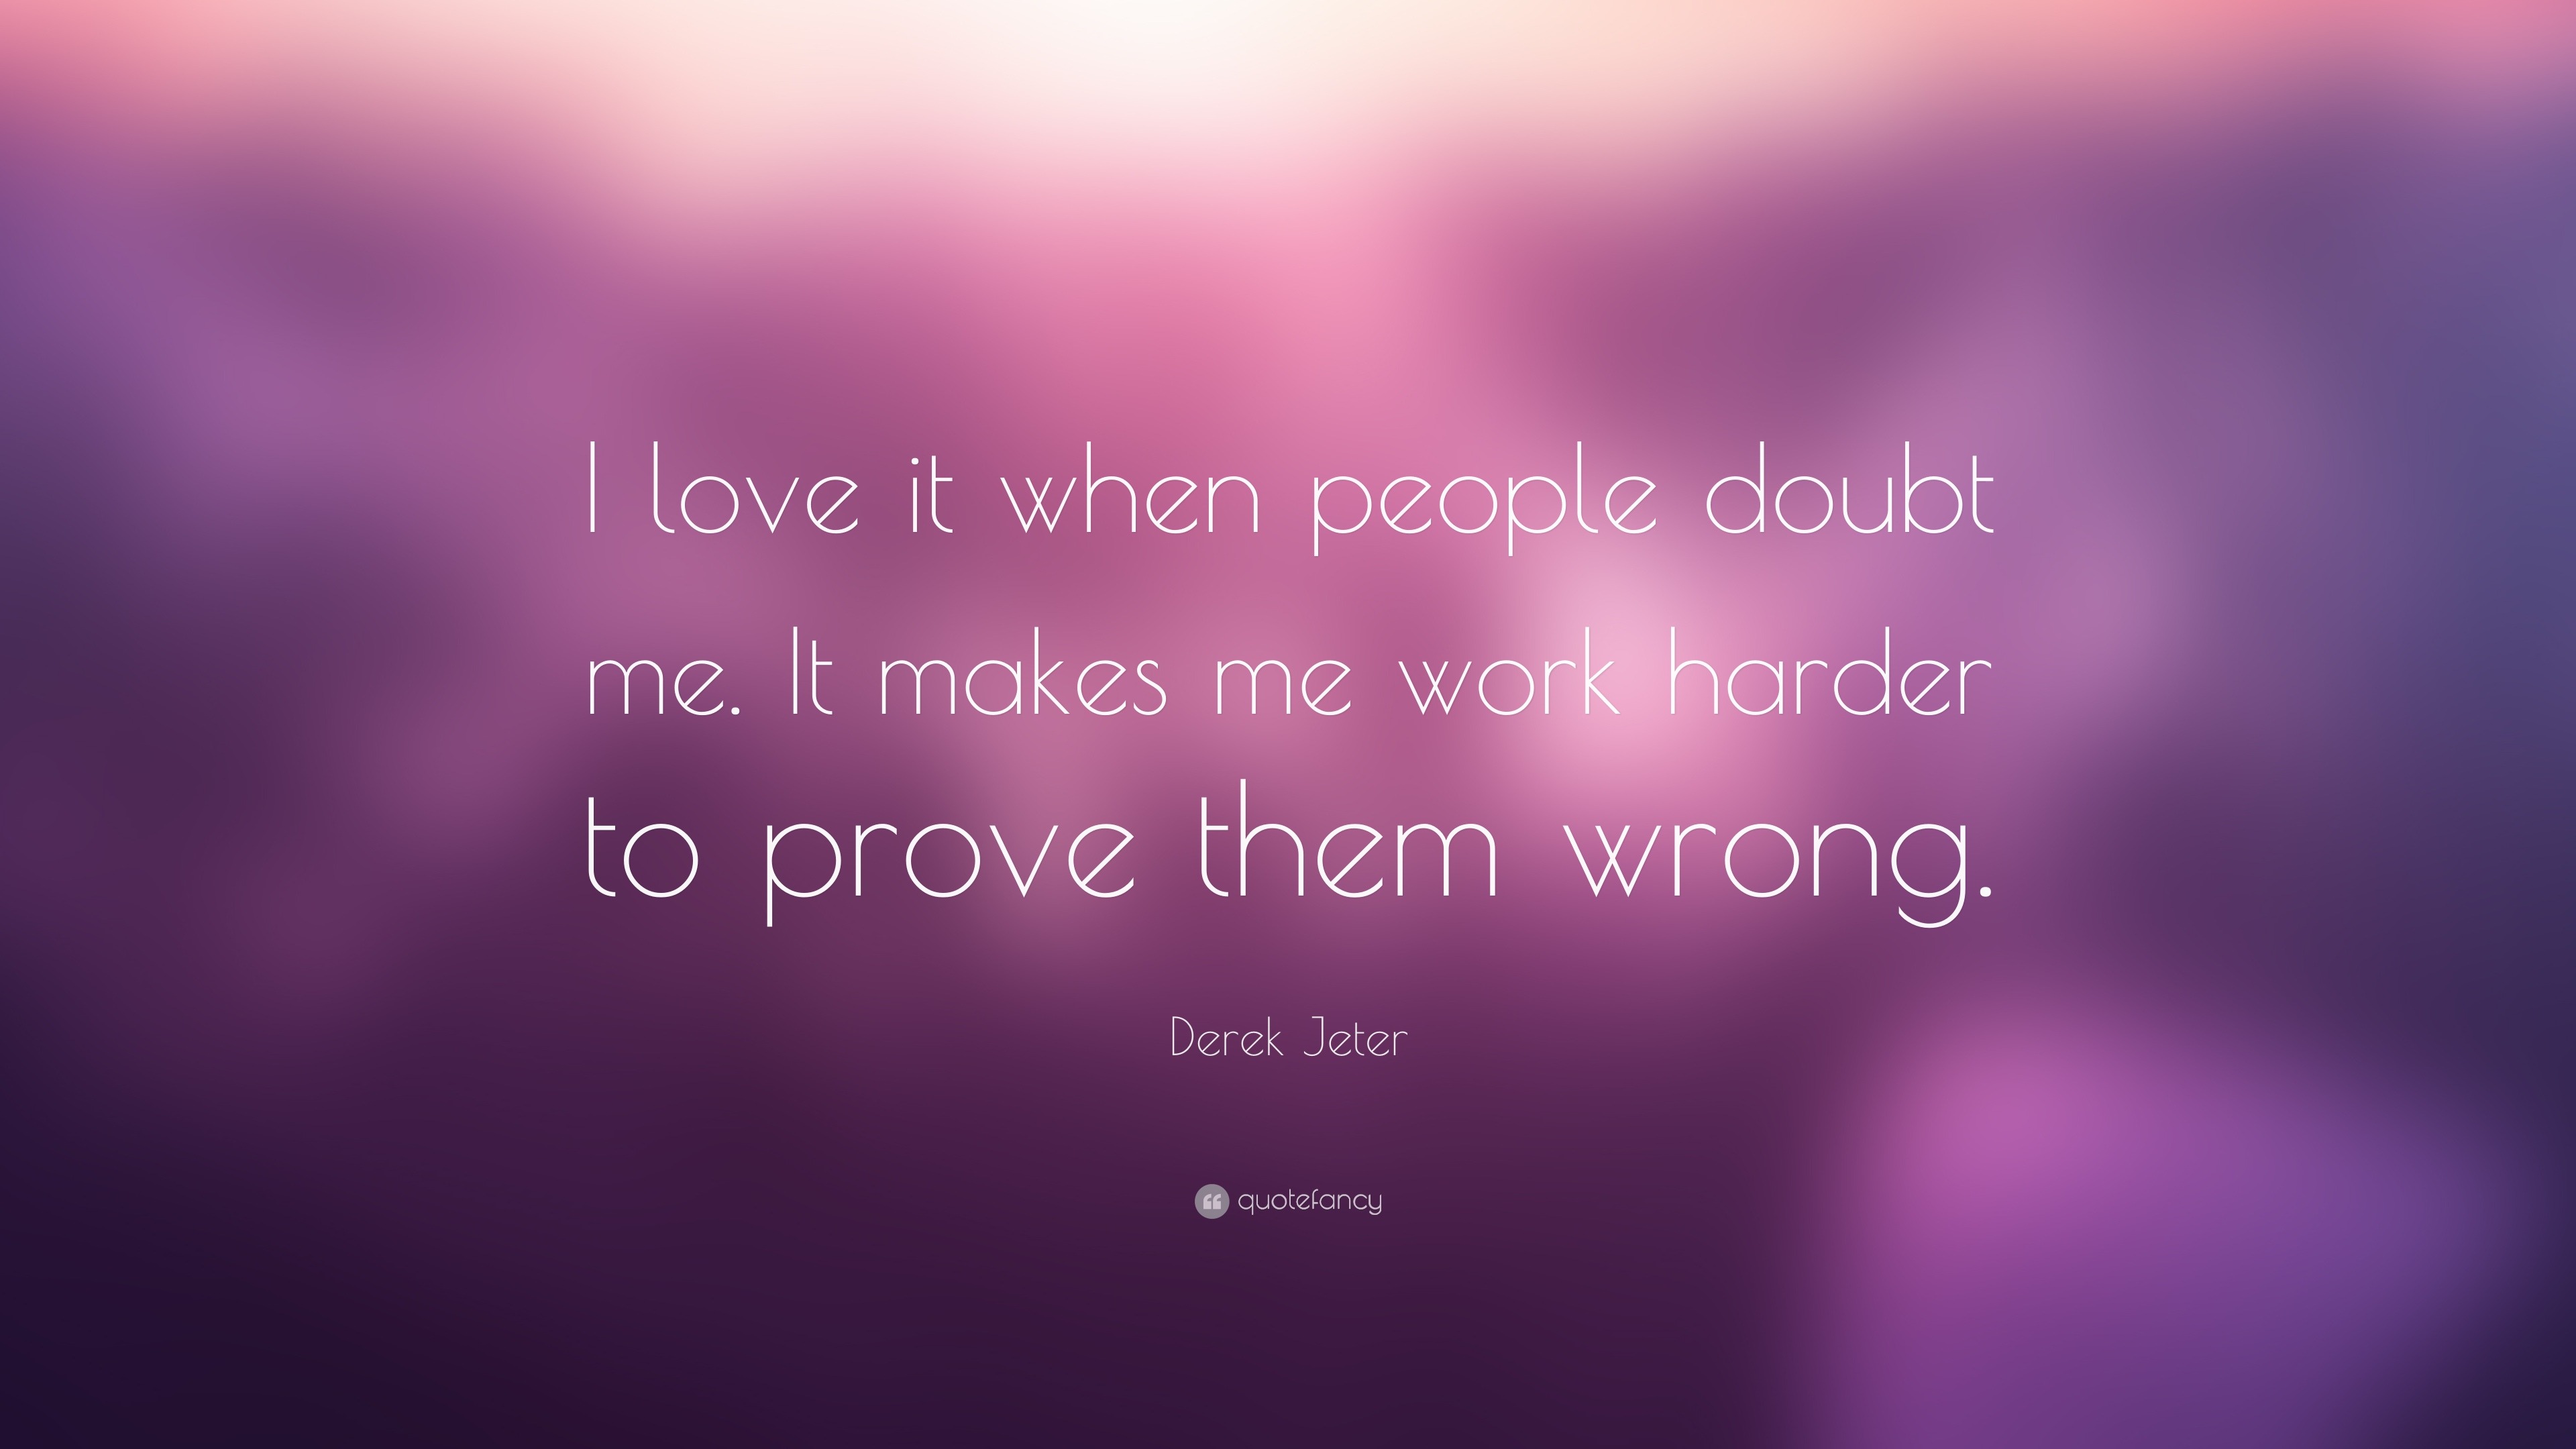 Derek Jeter - I love it when people doubt me. It makes me